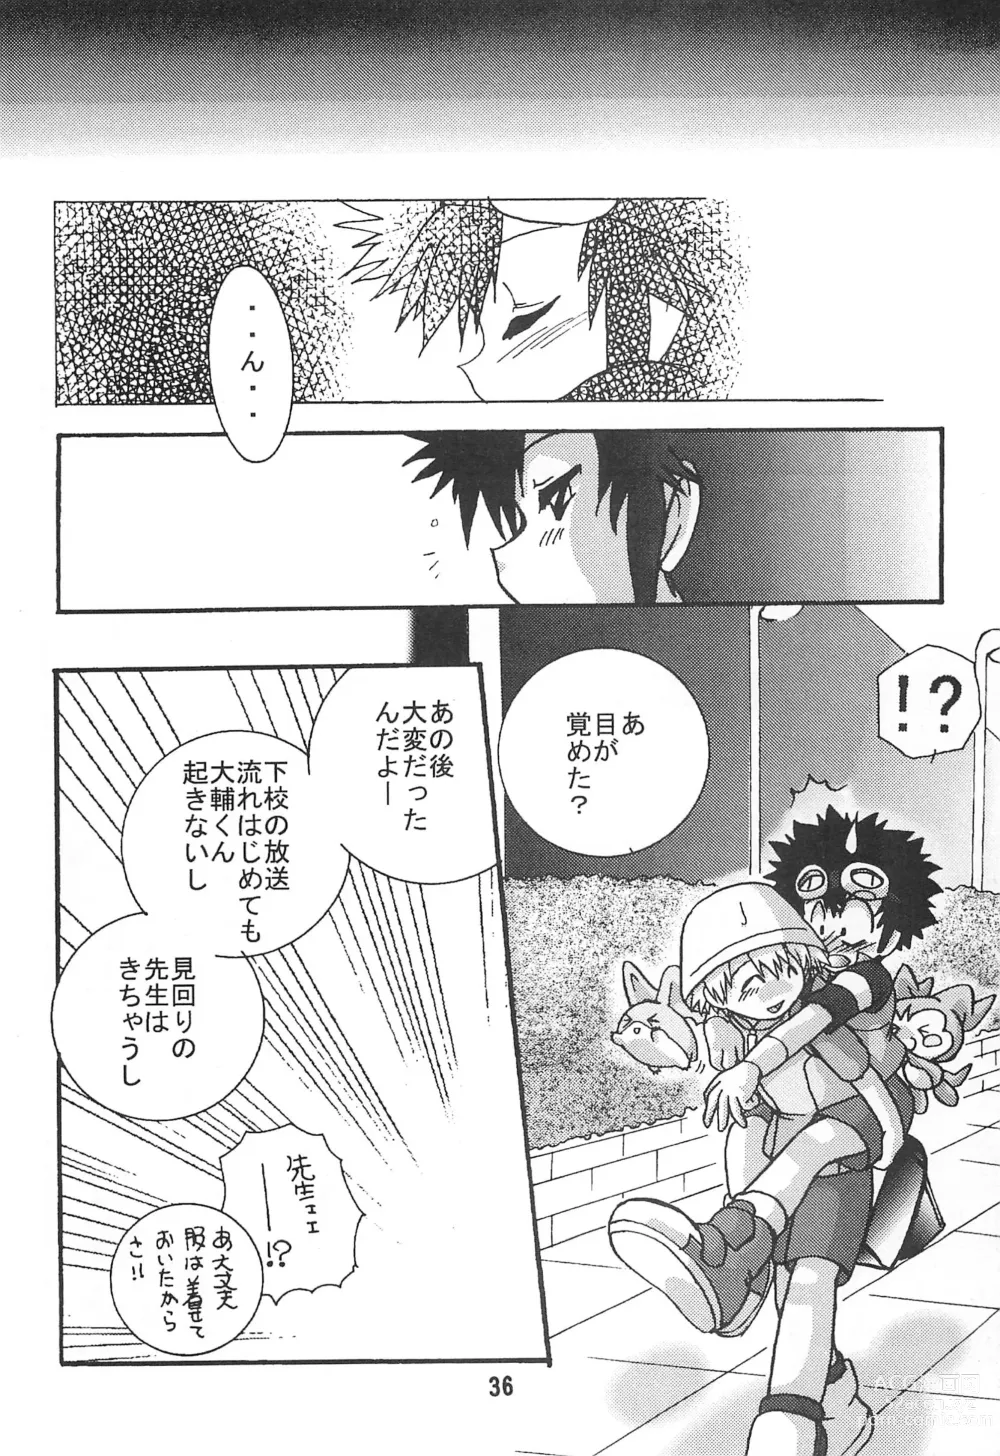 Page 36 of doujinshi SUBTLE RELATION